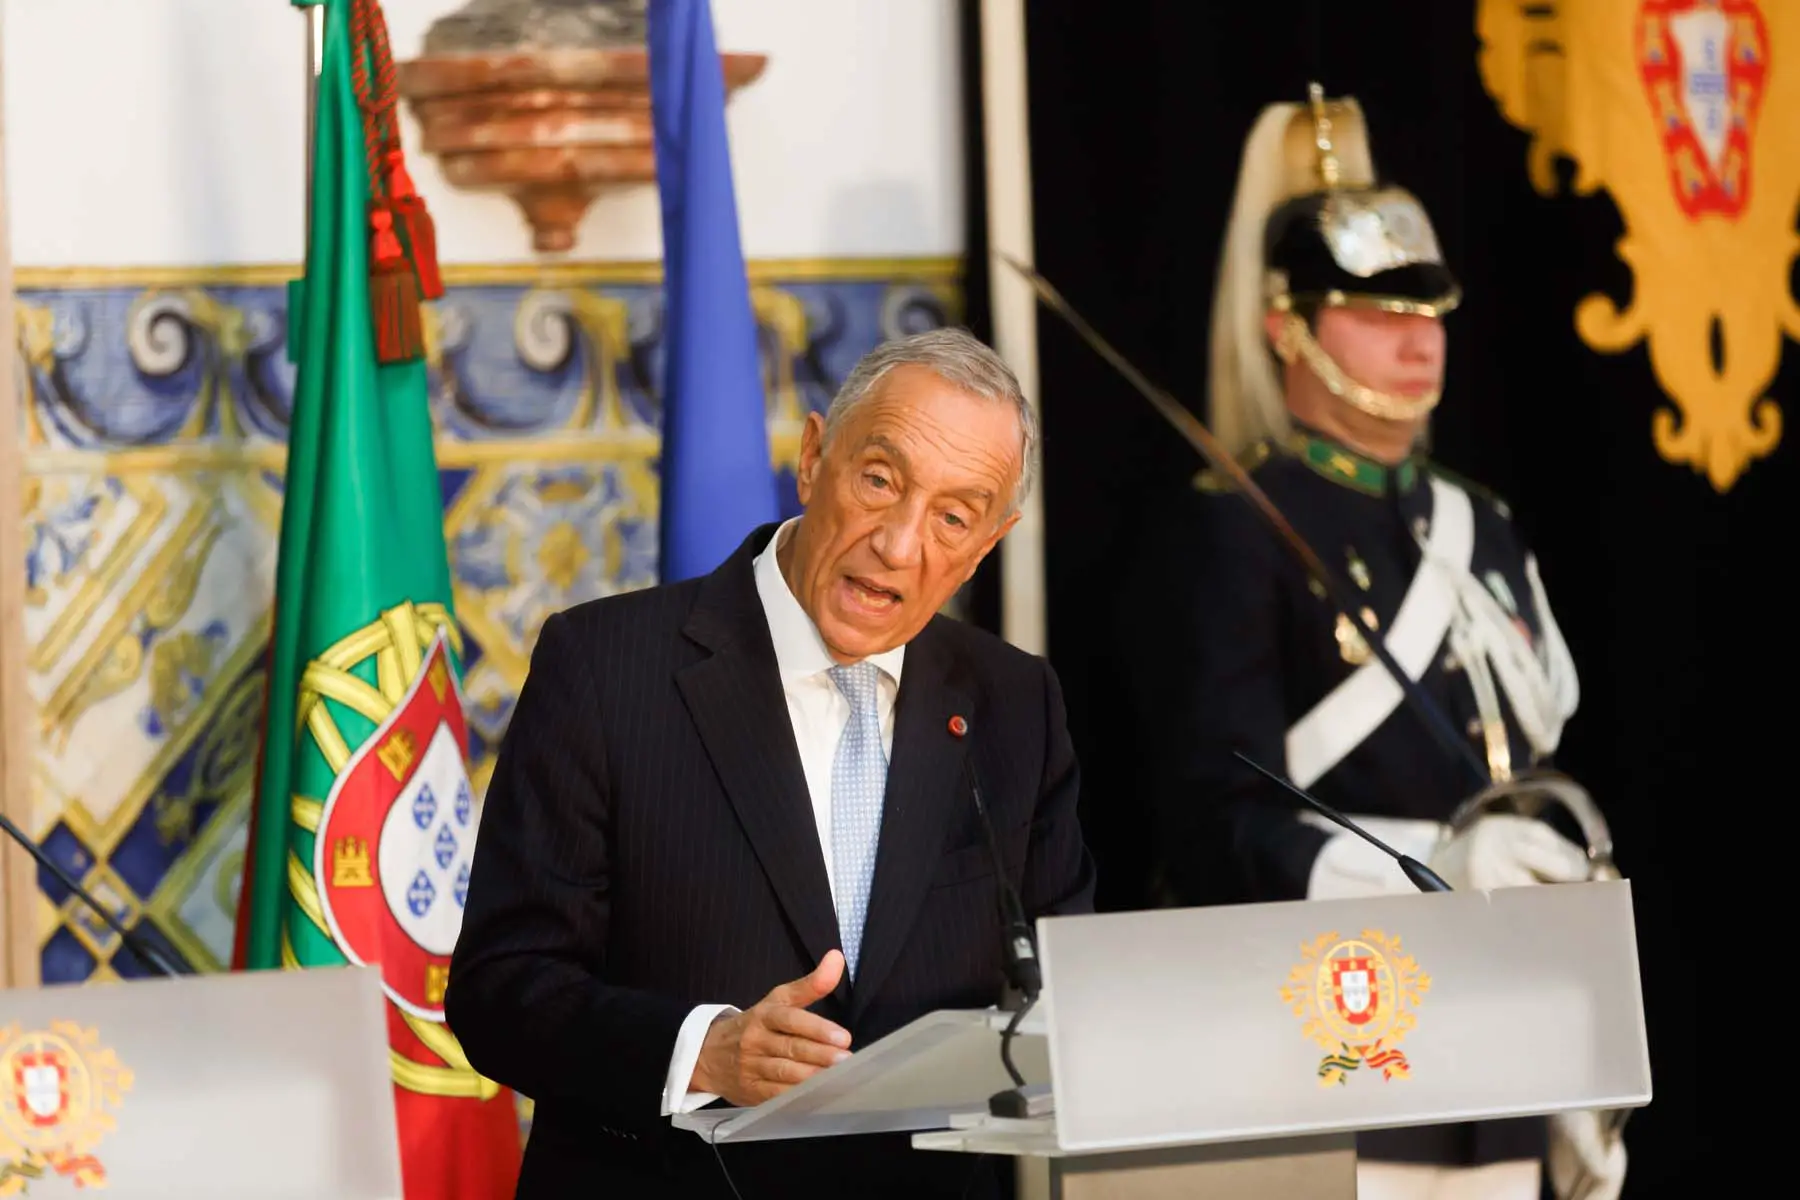 Portuguese President